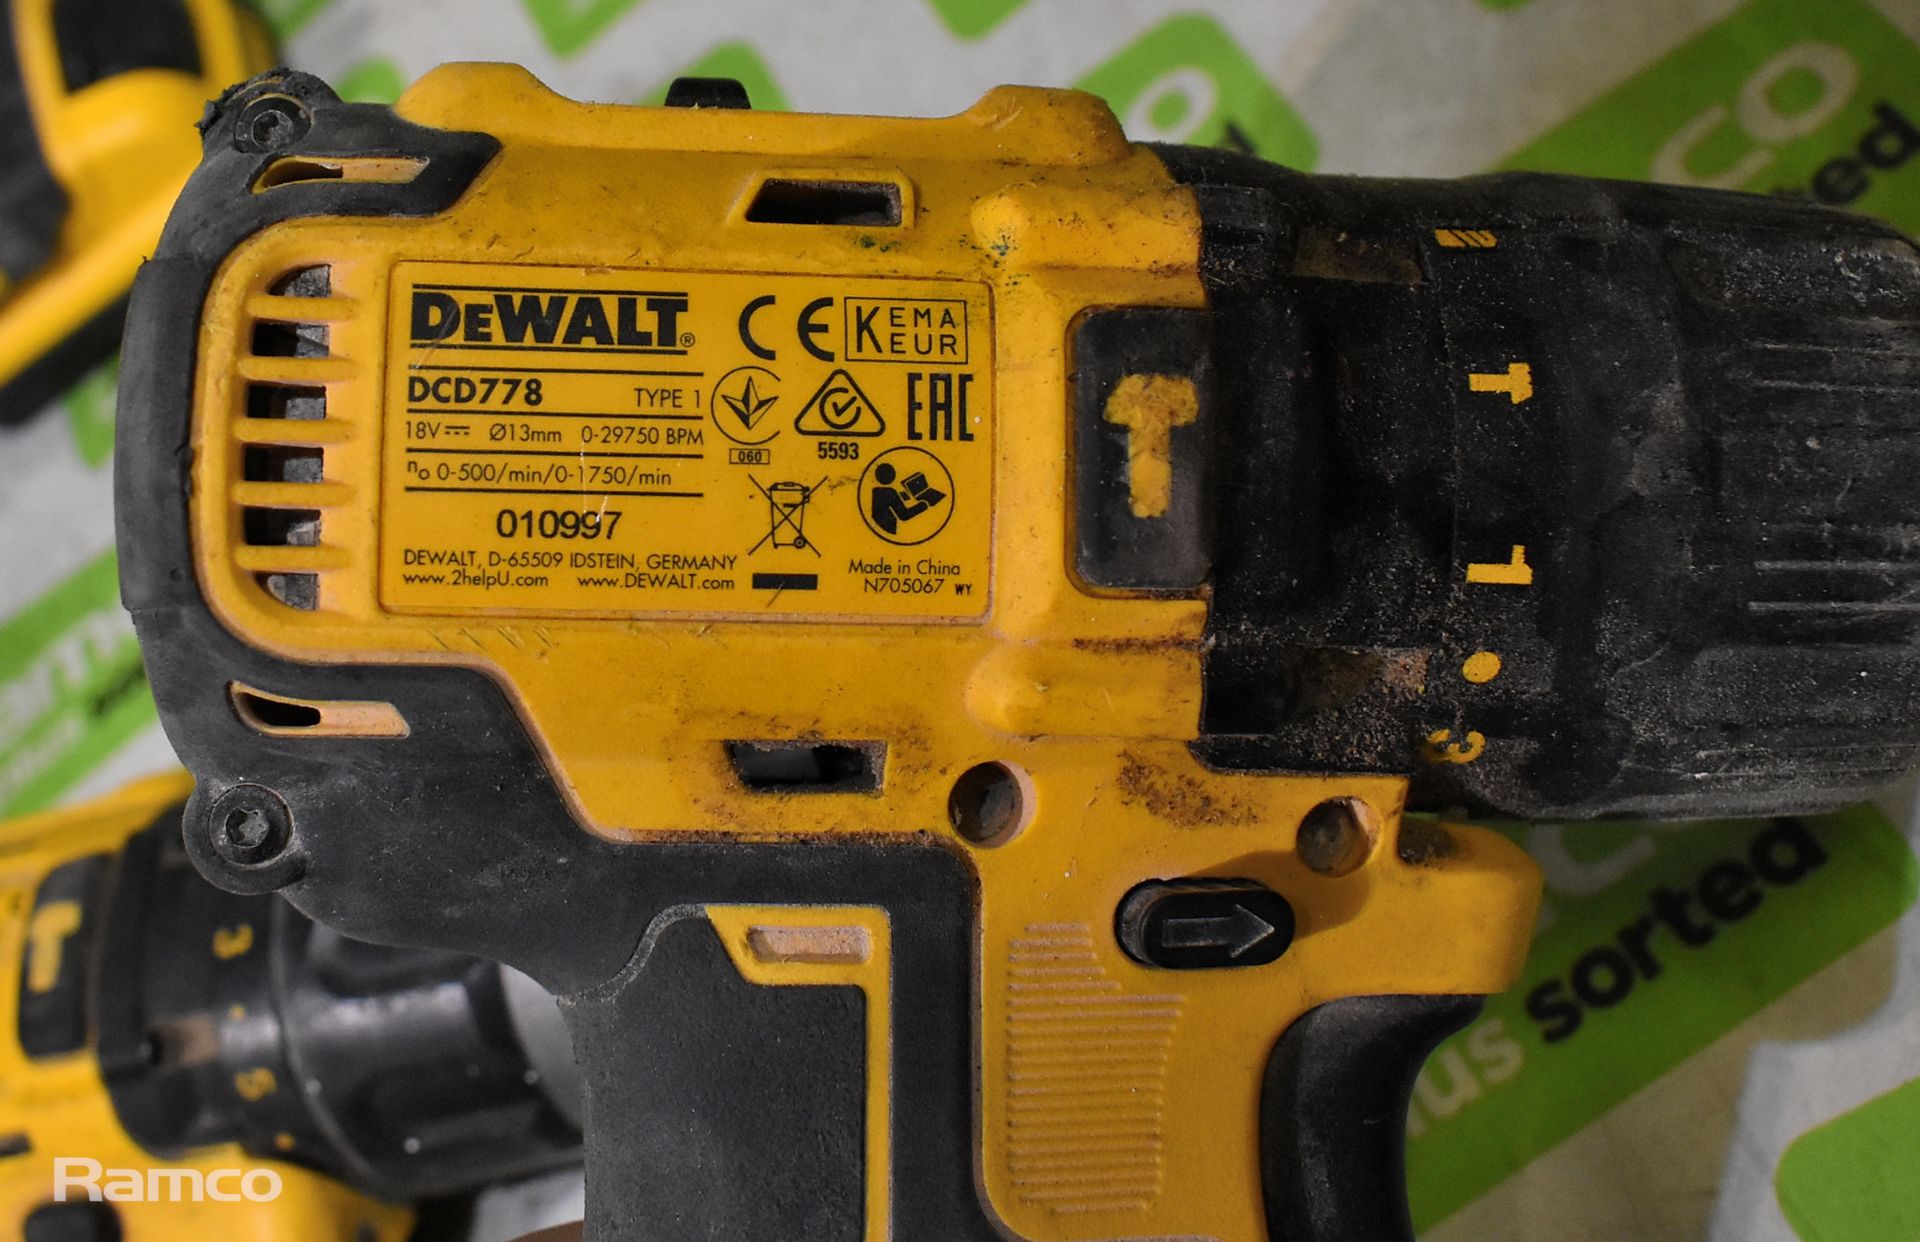 3x Dewalt drills - DCF815, CD785, DCD778 and charger with bag - NO BATTERIES - Bild 8 aus 9